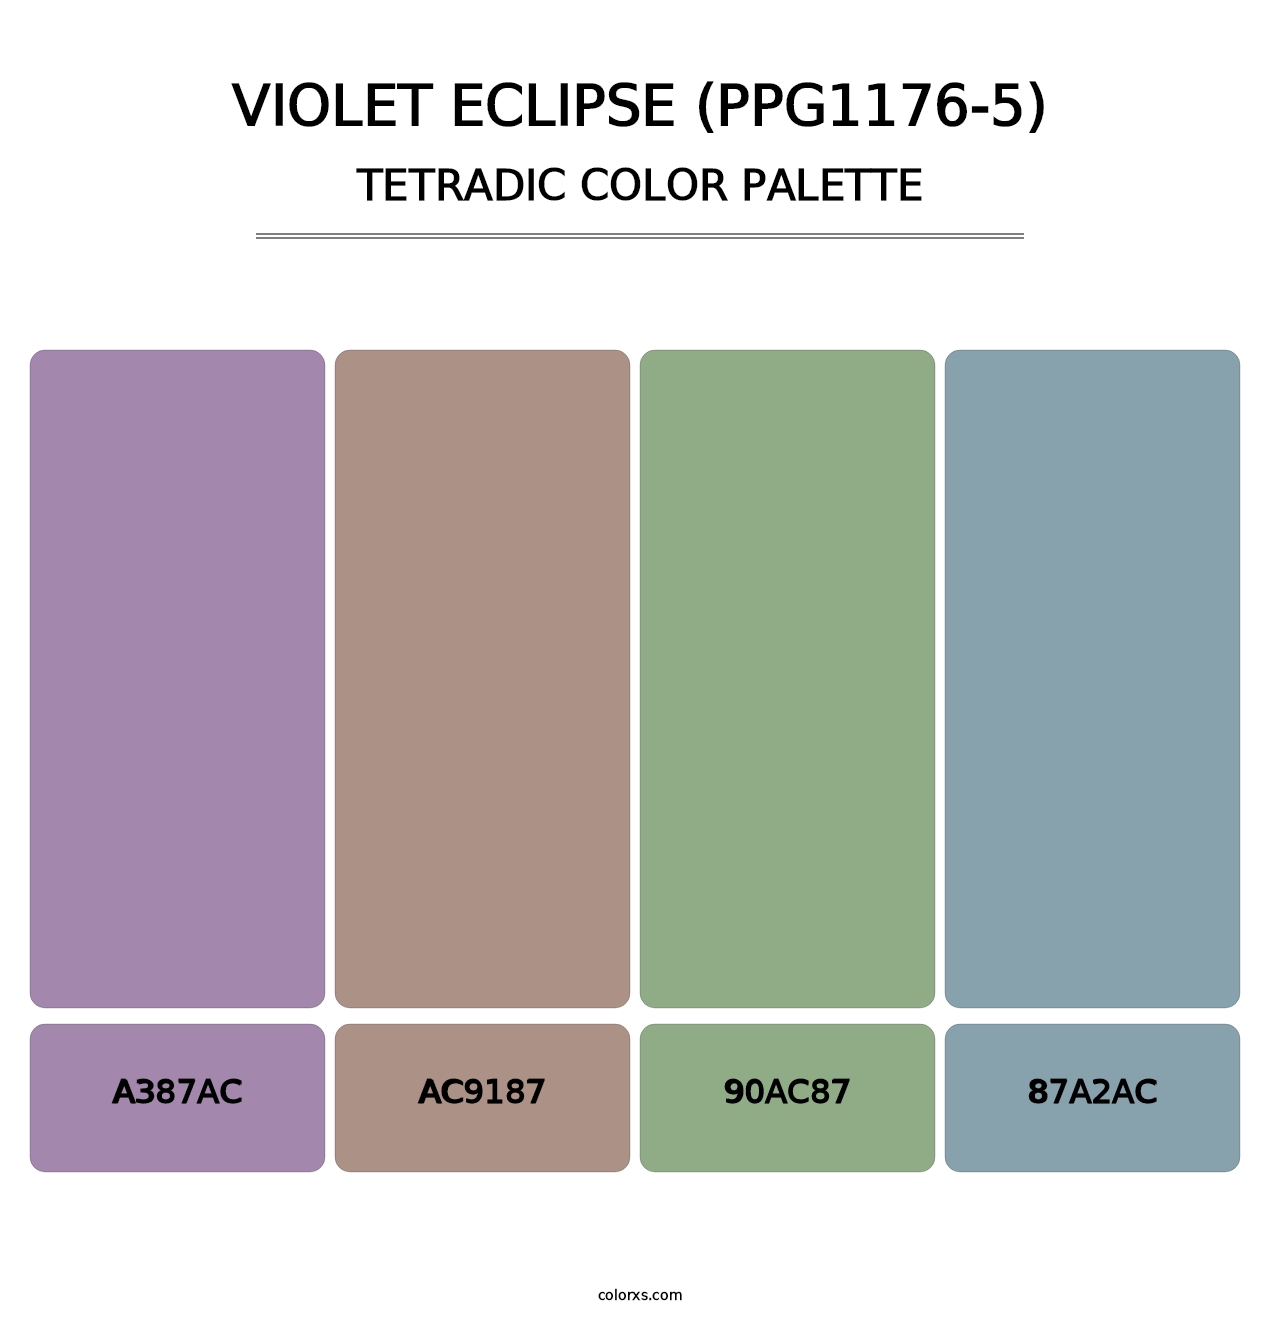 Violet Eclipse (PPG1176-5) - Tetradic Color Palette